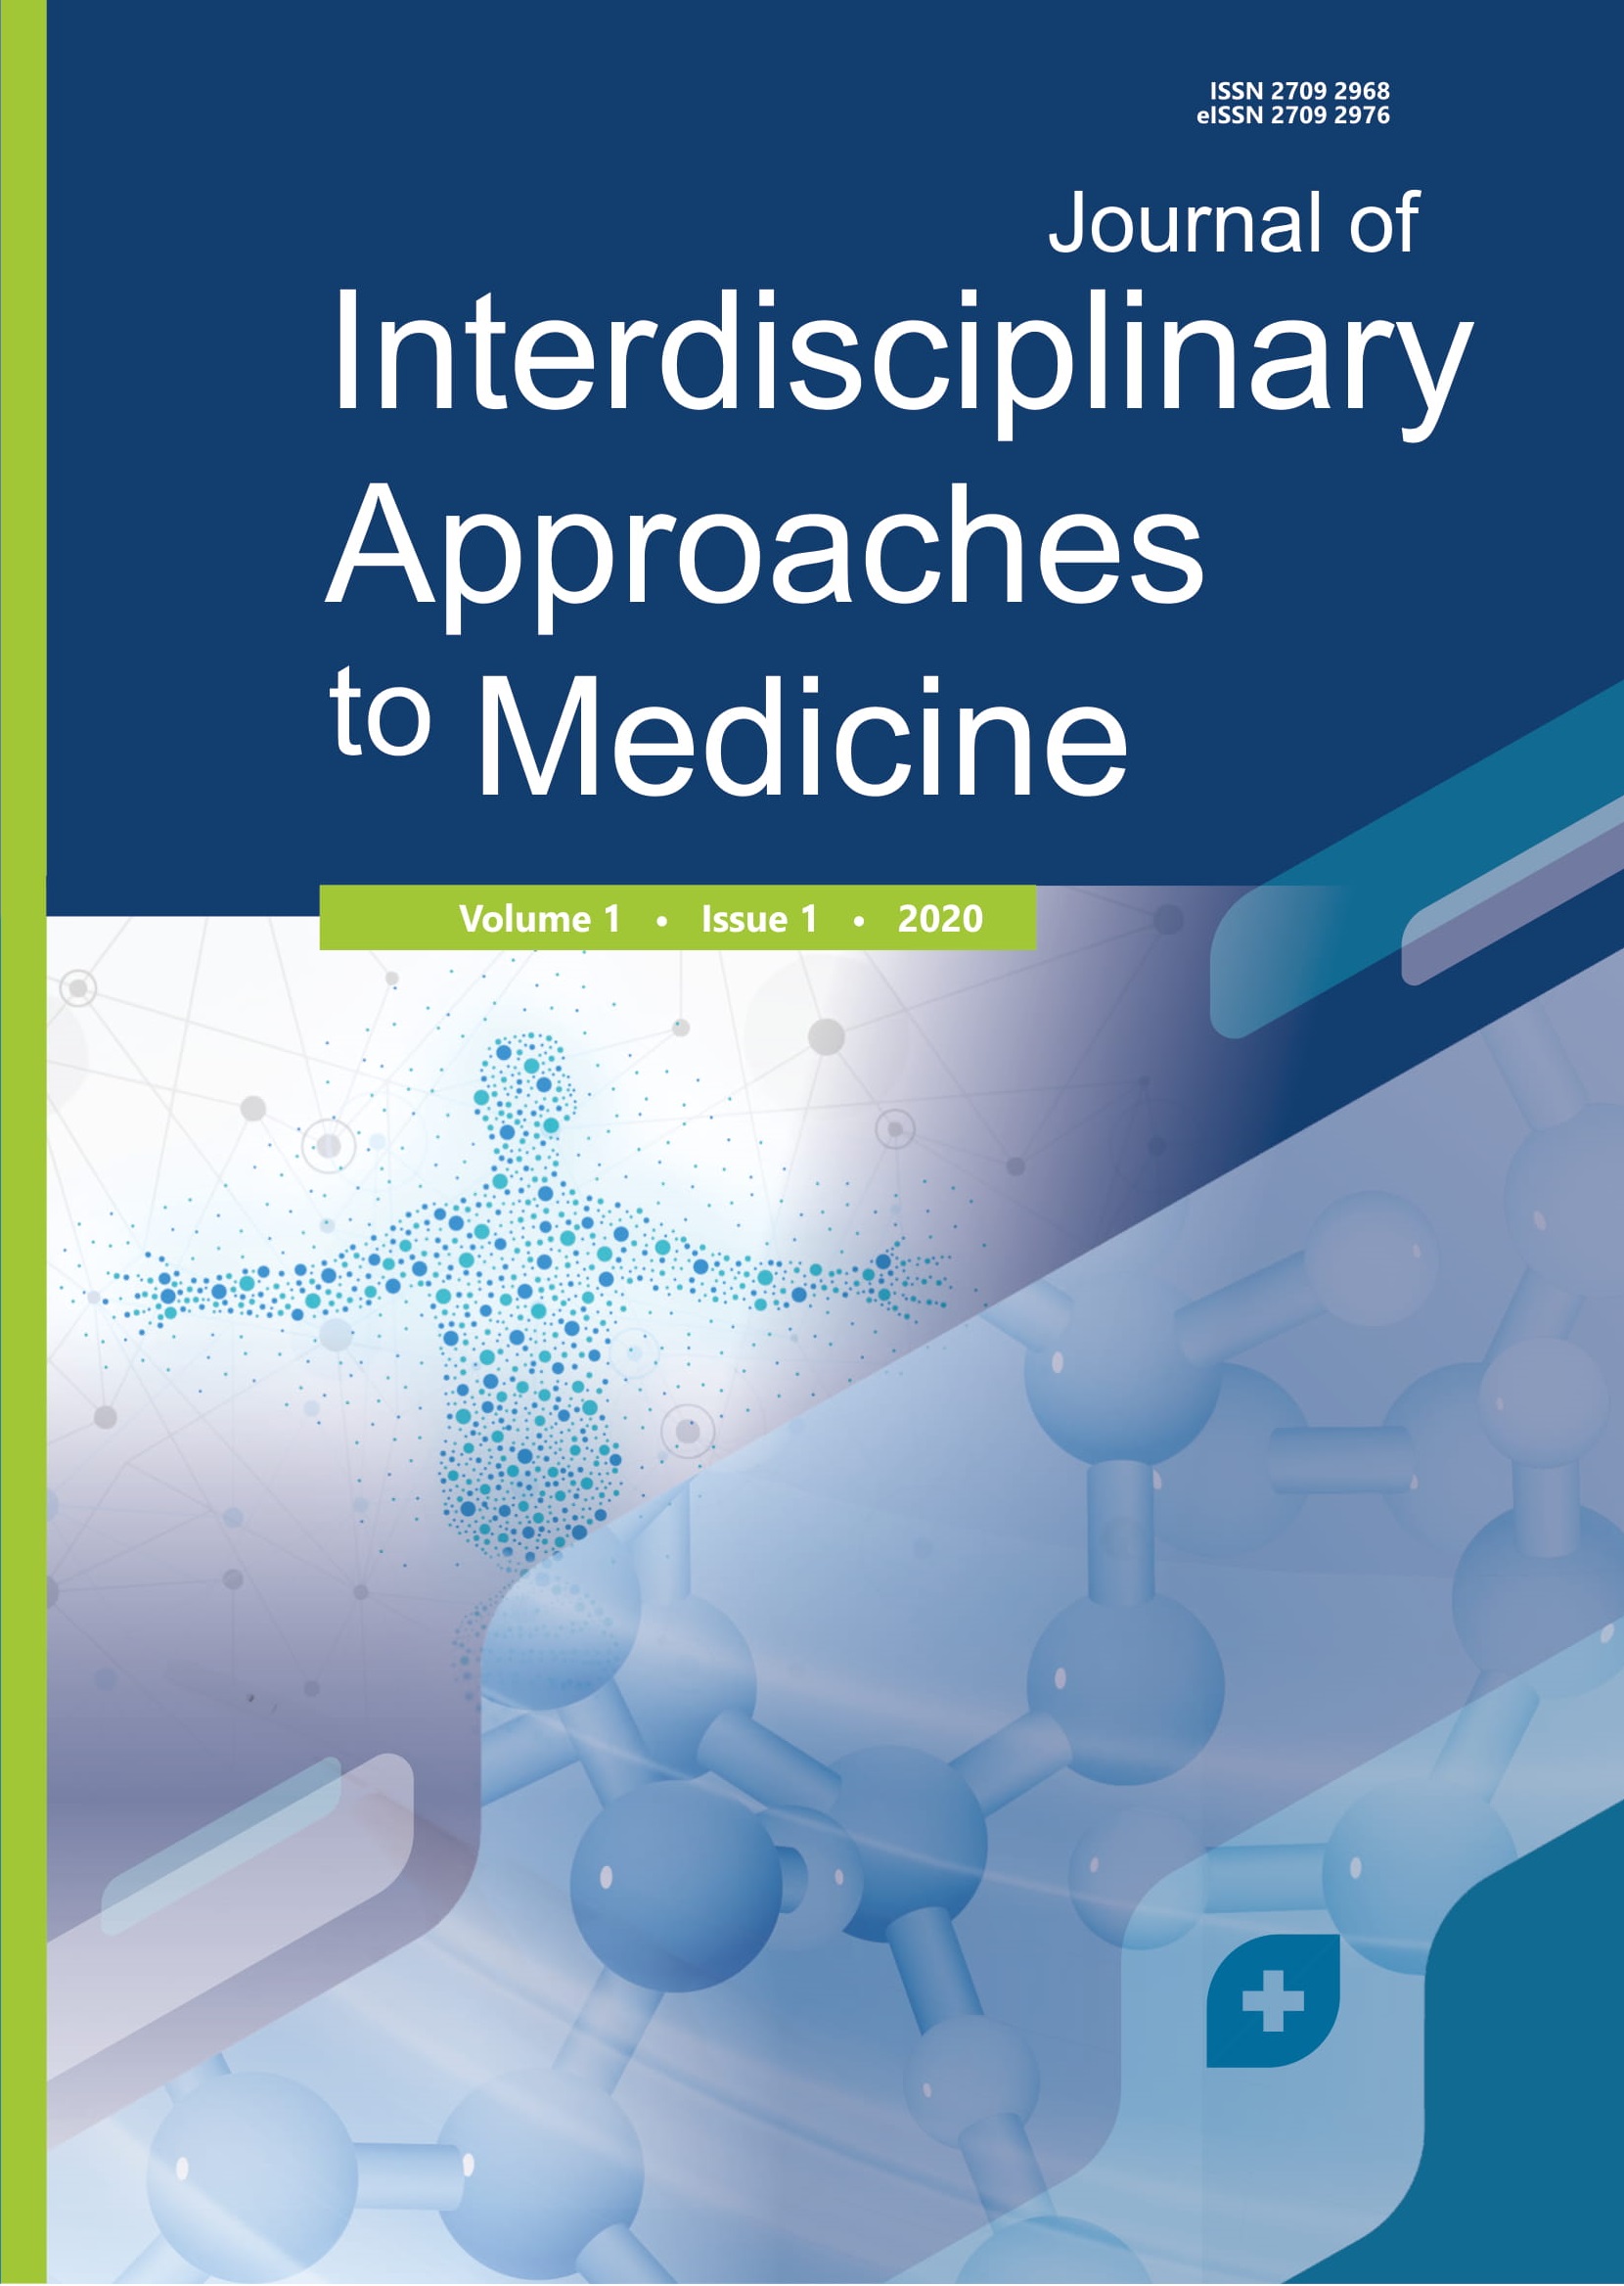 					View Vol. 1 No. 1 (2020): INTERDISCIPLINARY APPROACHES TO MEDICINE
				